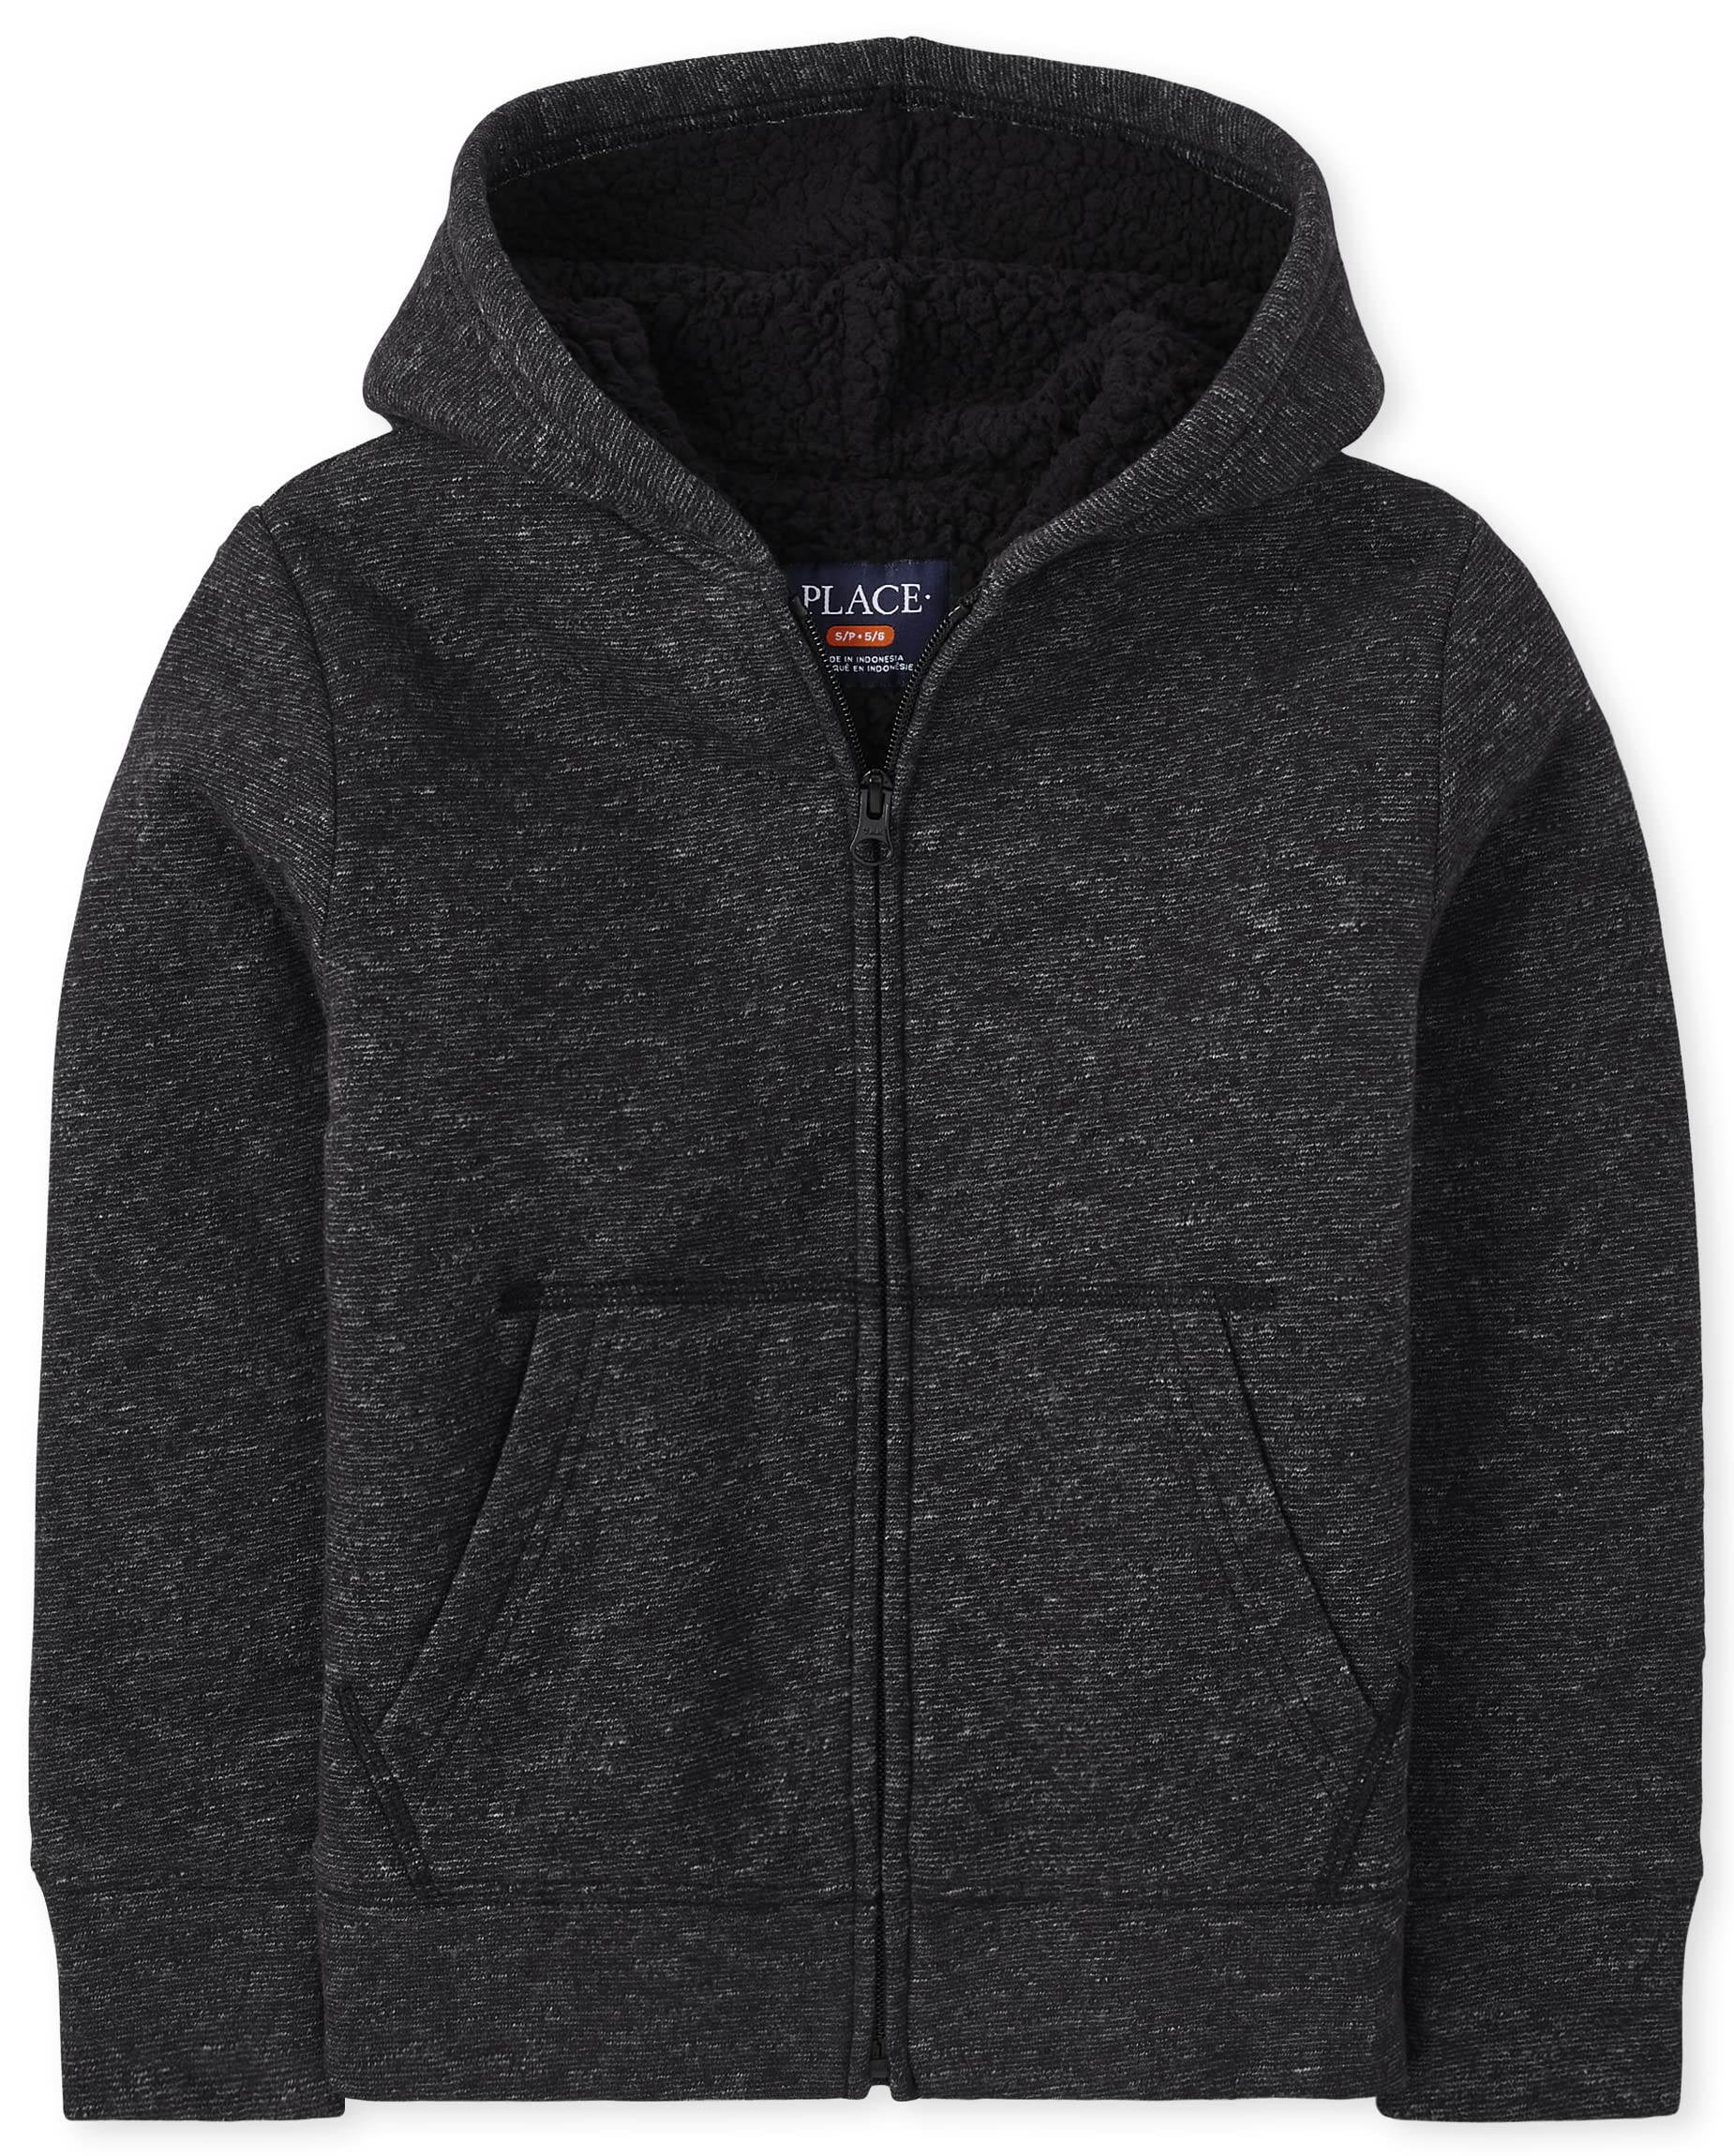 The Children's Place Boys' Long Sleeve, Sherpa Lined, Zip-Front Hoodie Sweatshirt